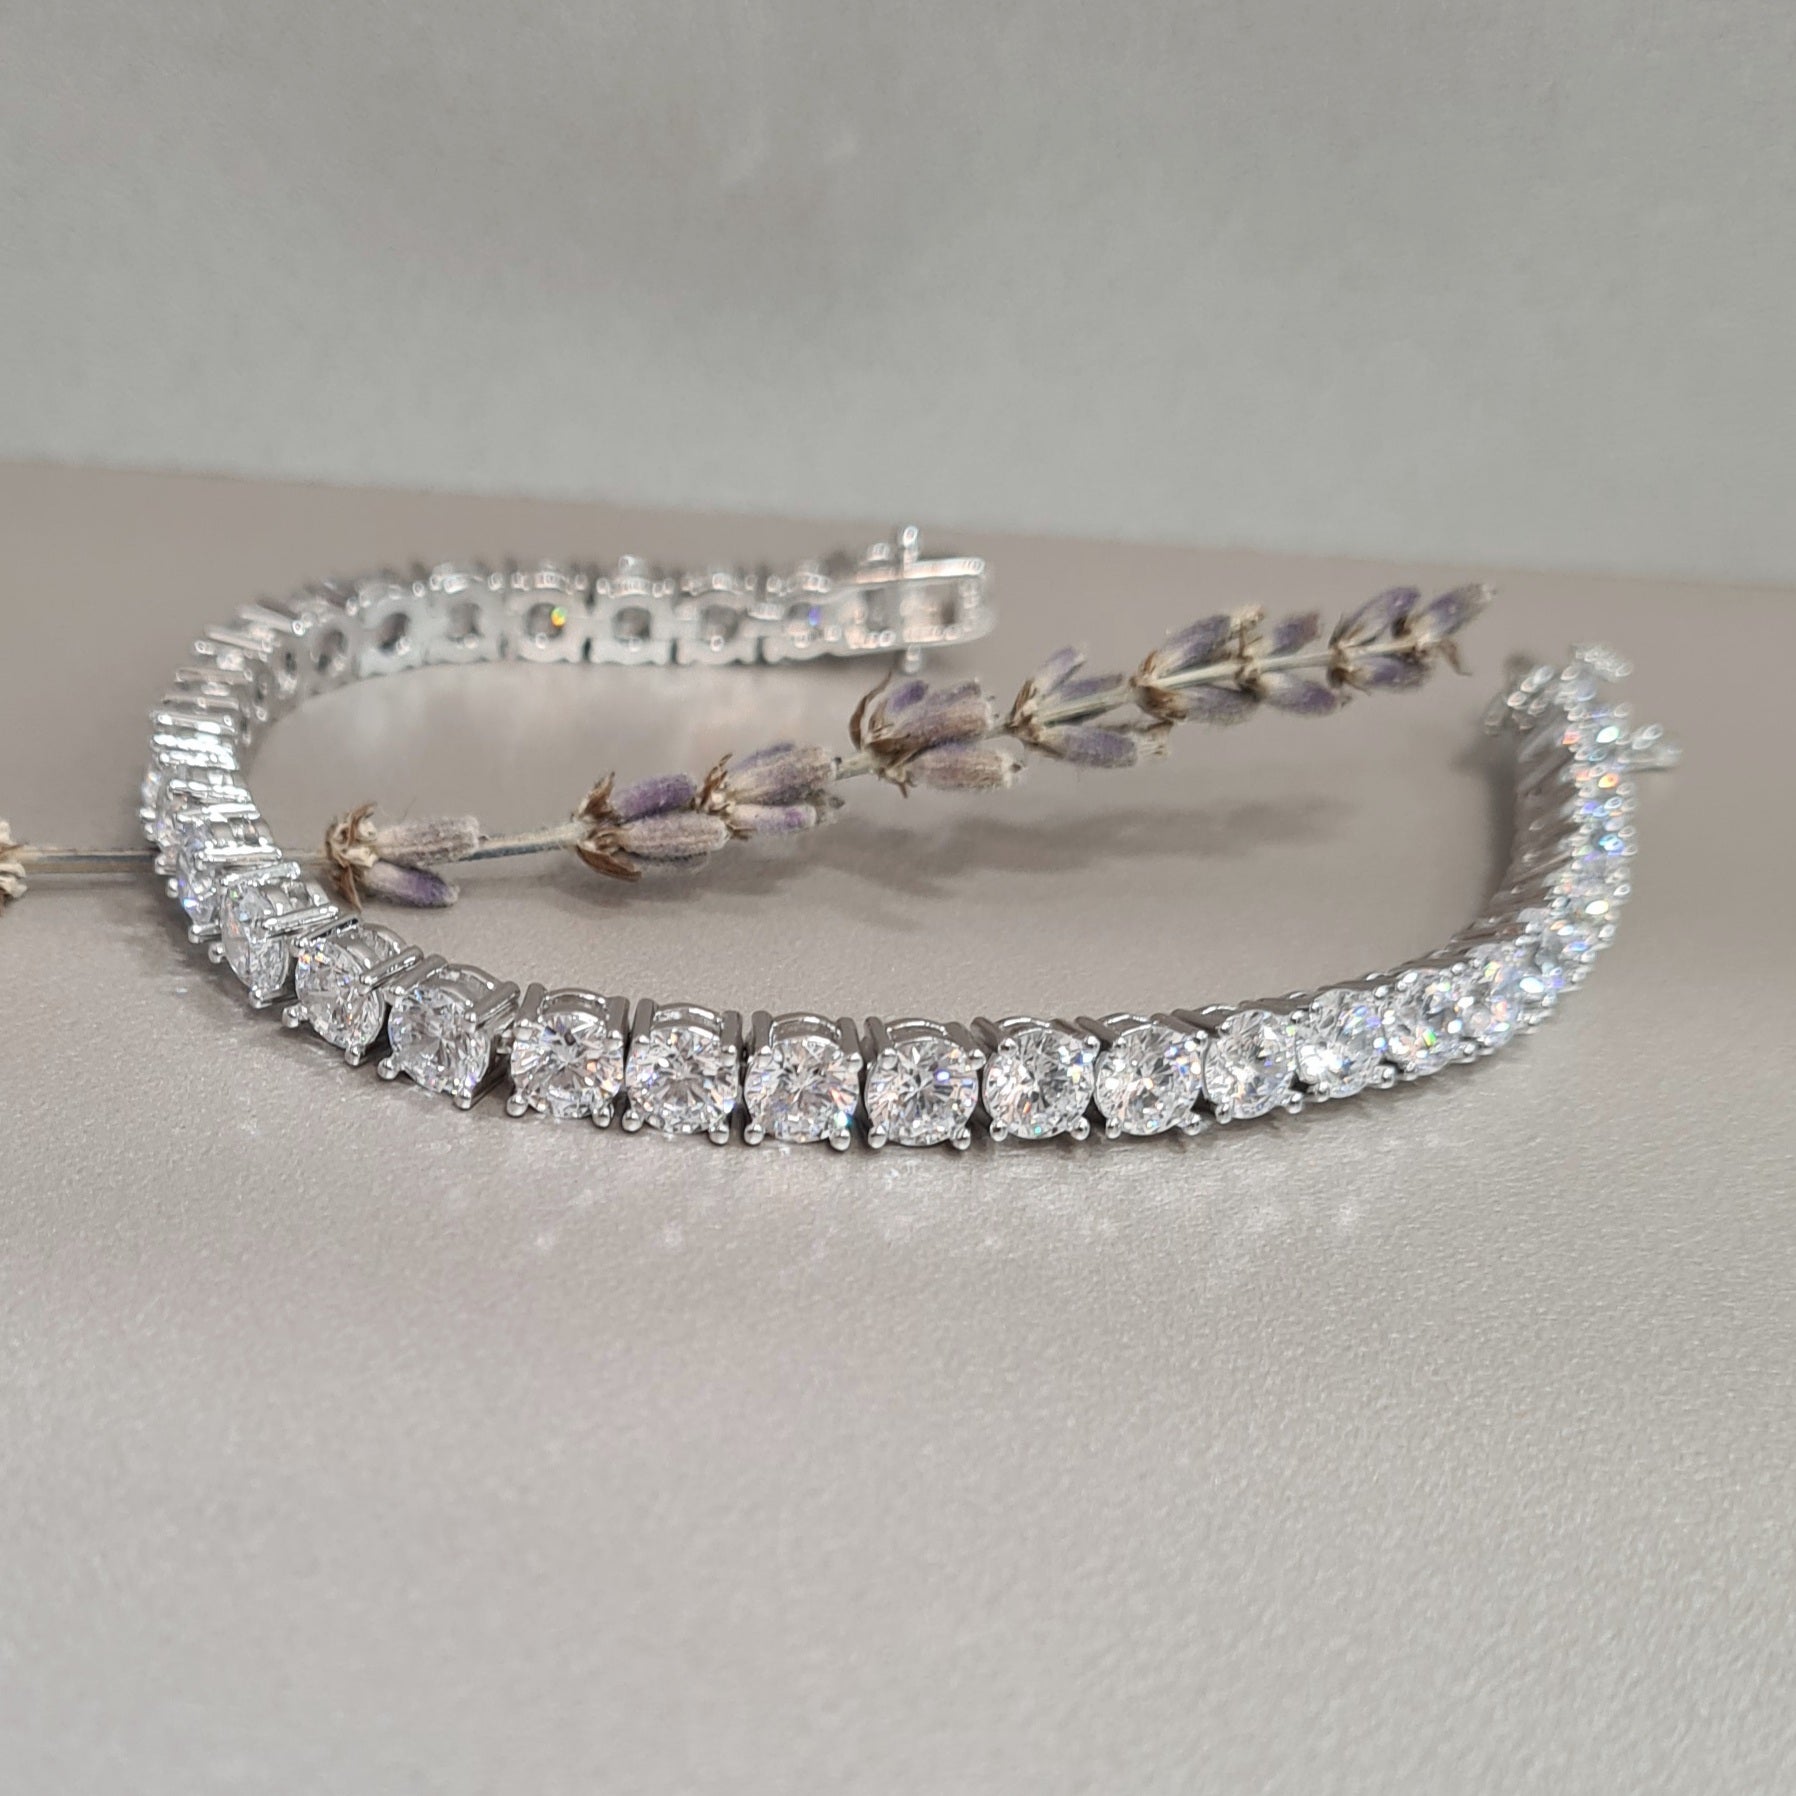 Stunning Simulated Diamond Tennis Bracelet